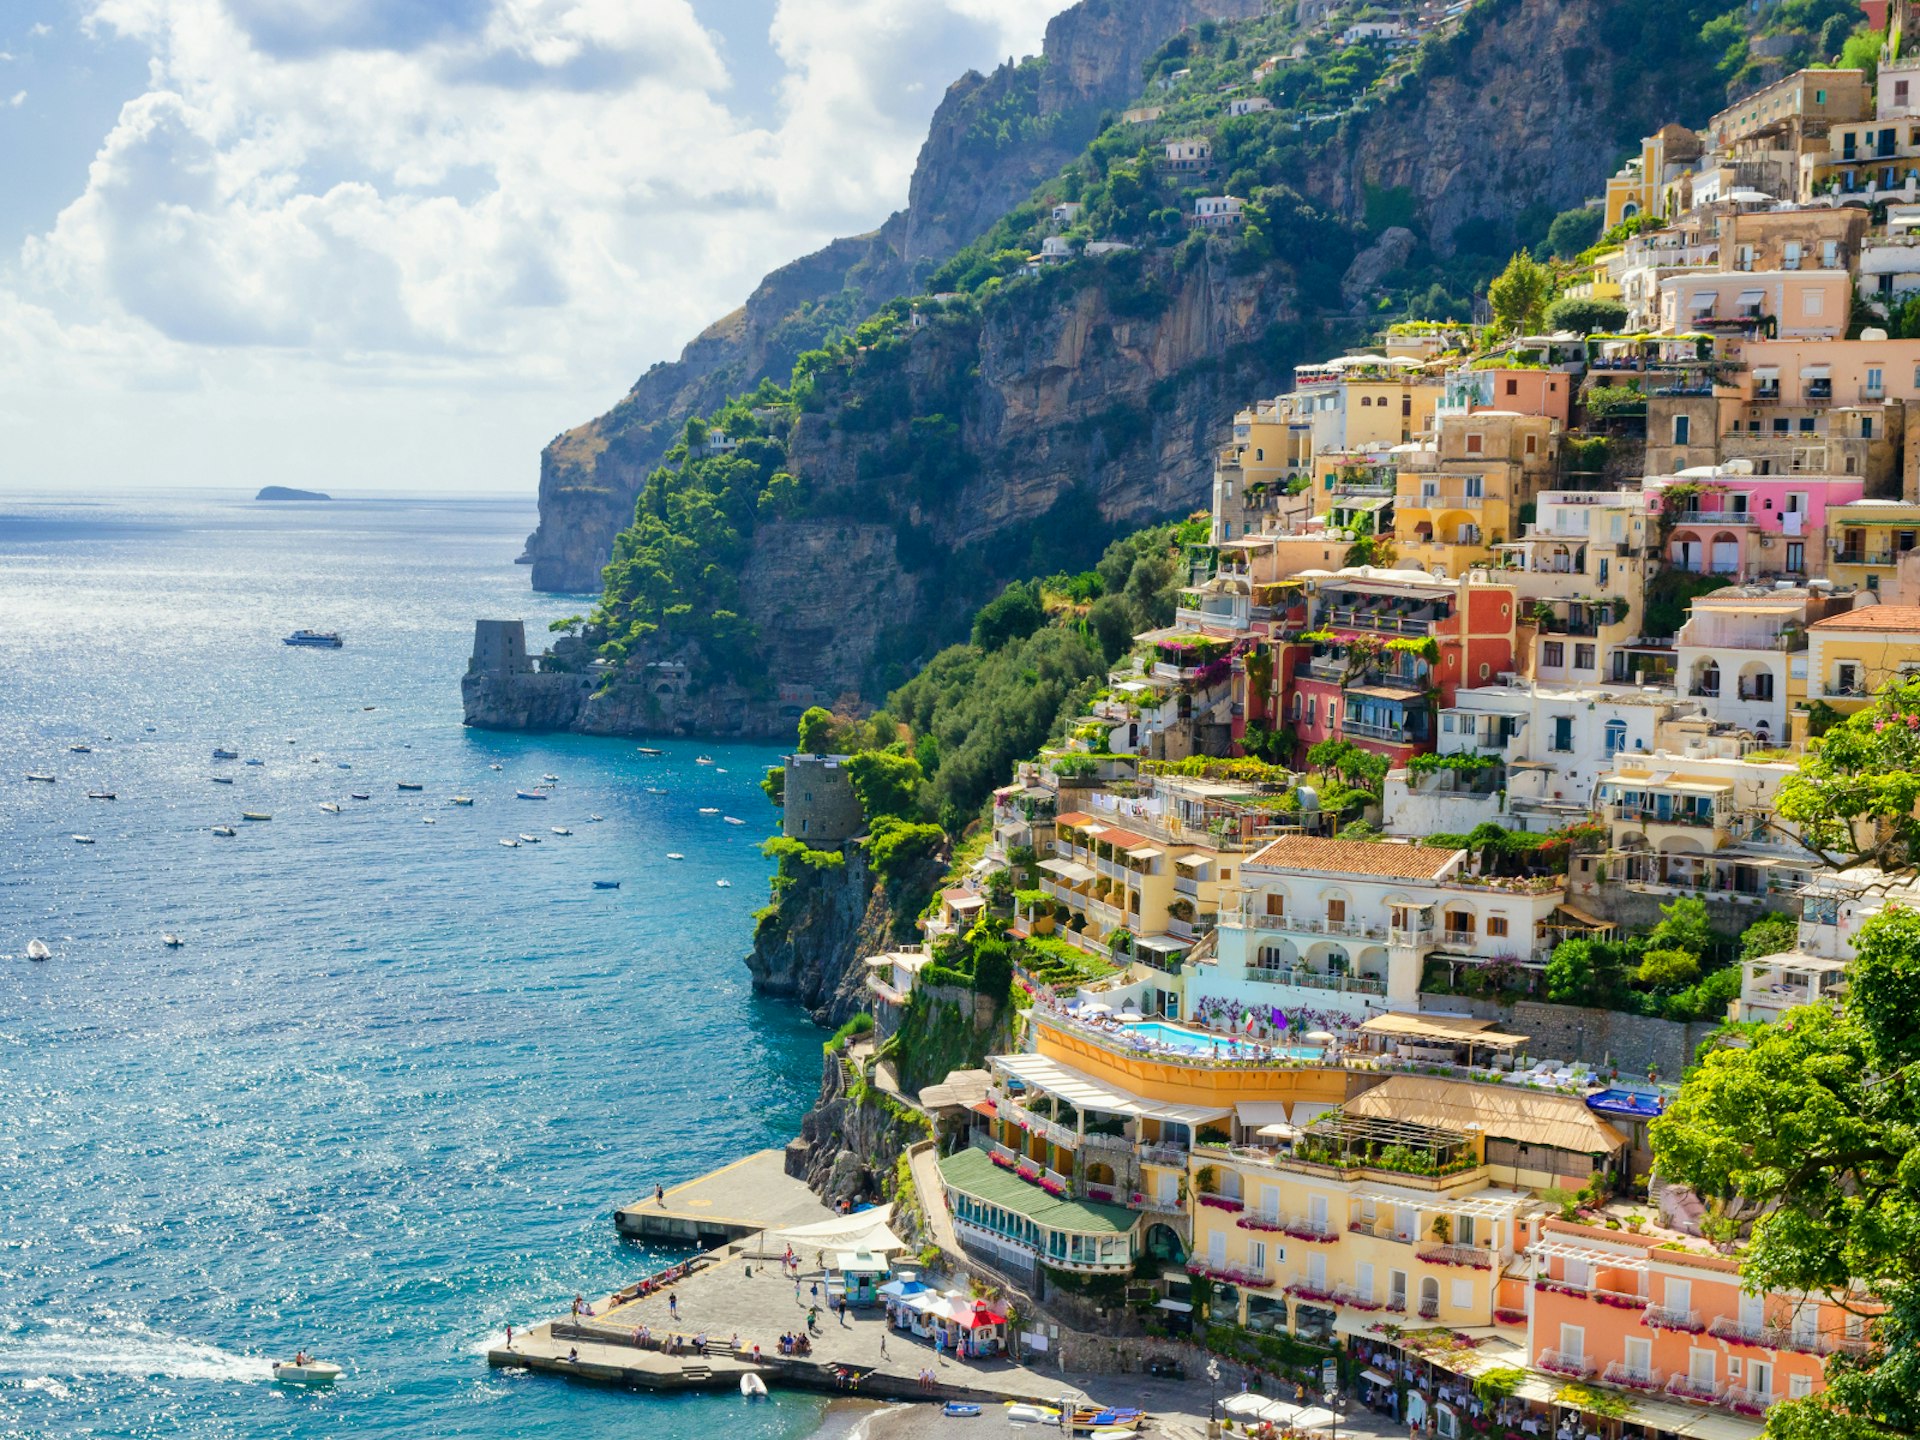 The colourful houses of Positano on the Amalfi Coast, Italy © lukaszimilena / Shutterstock